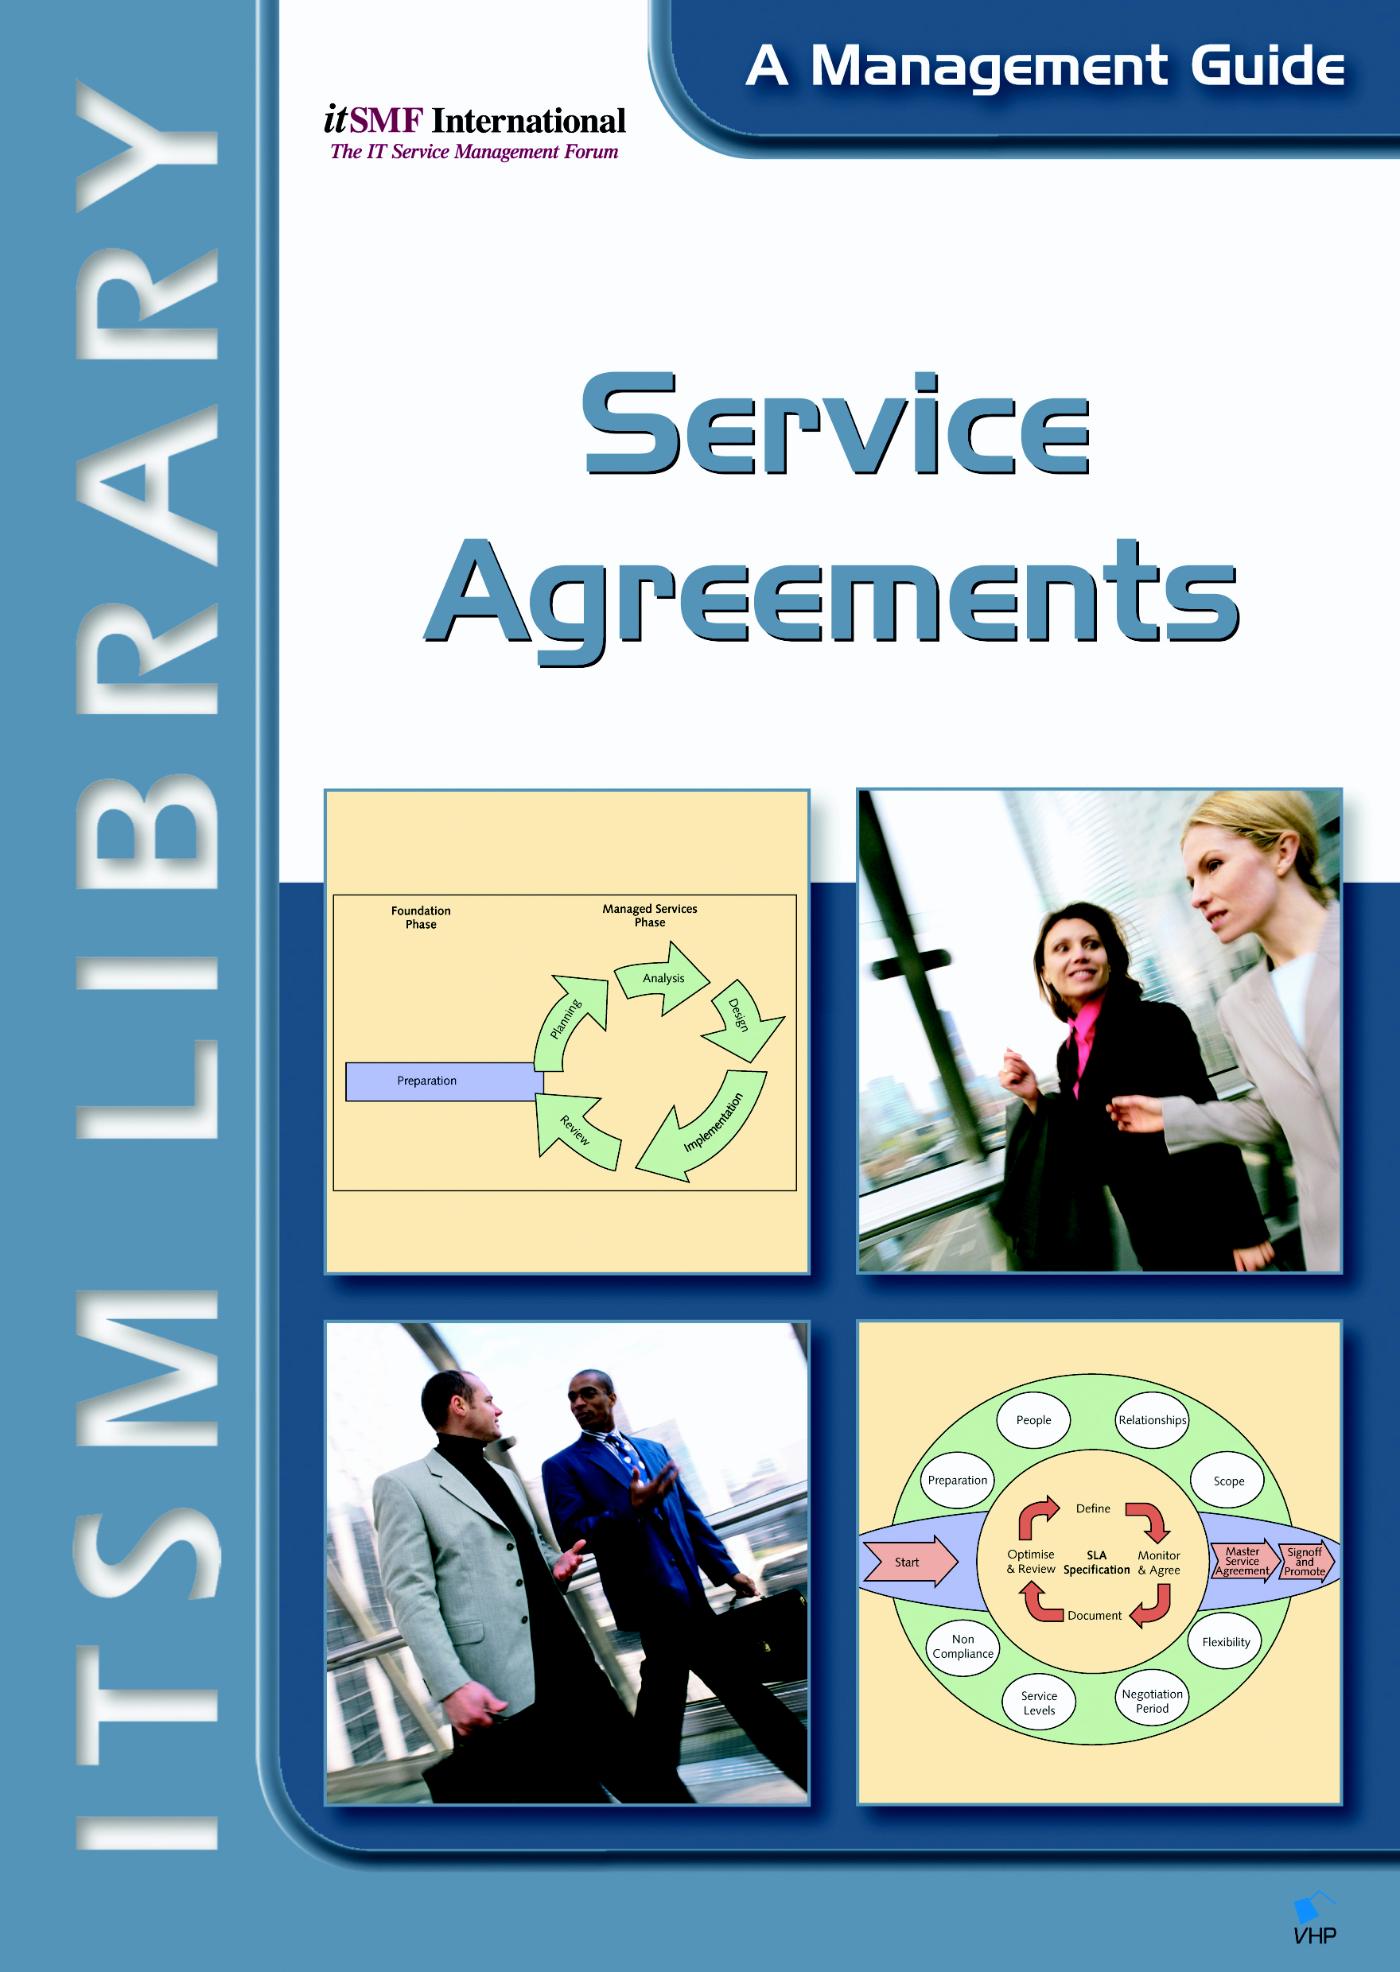 Service Agreements / deel a management guide (Ebook)